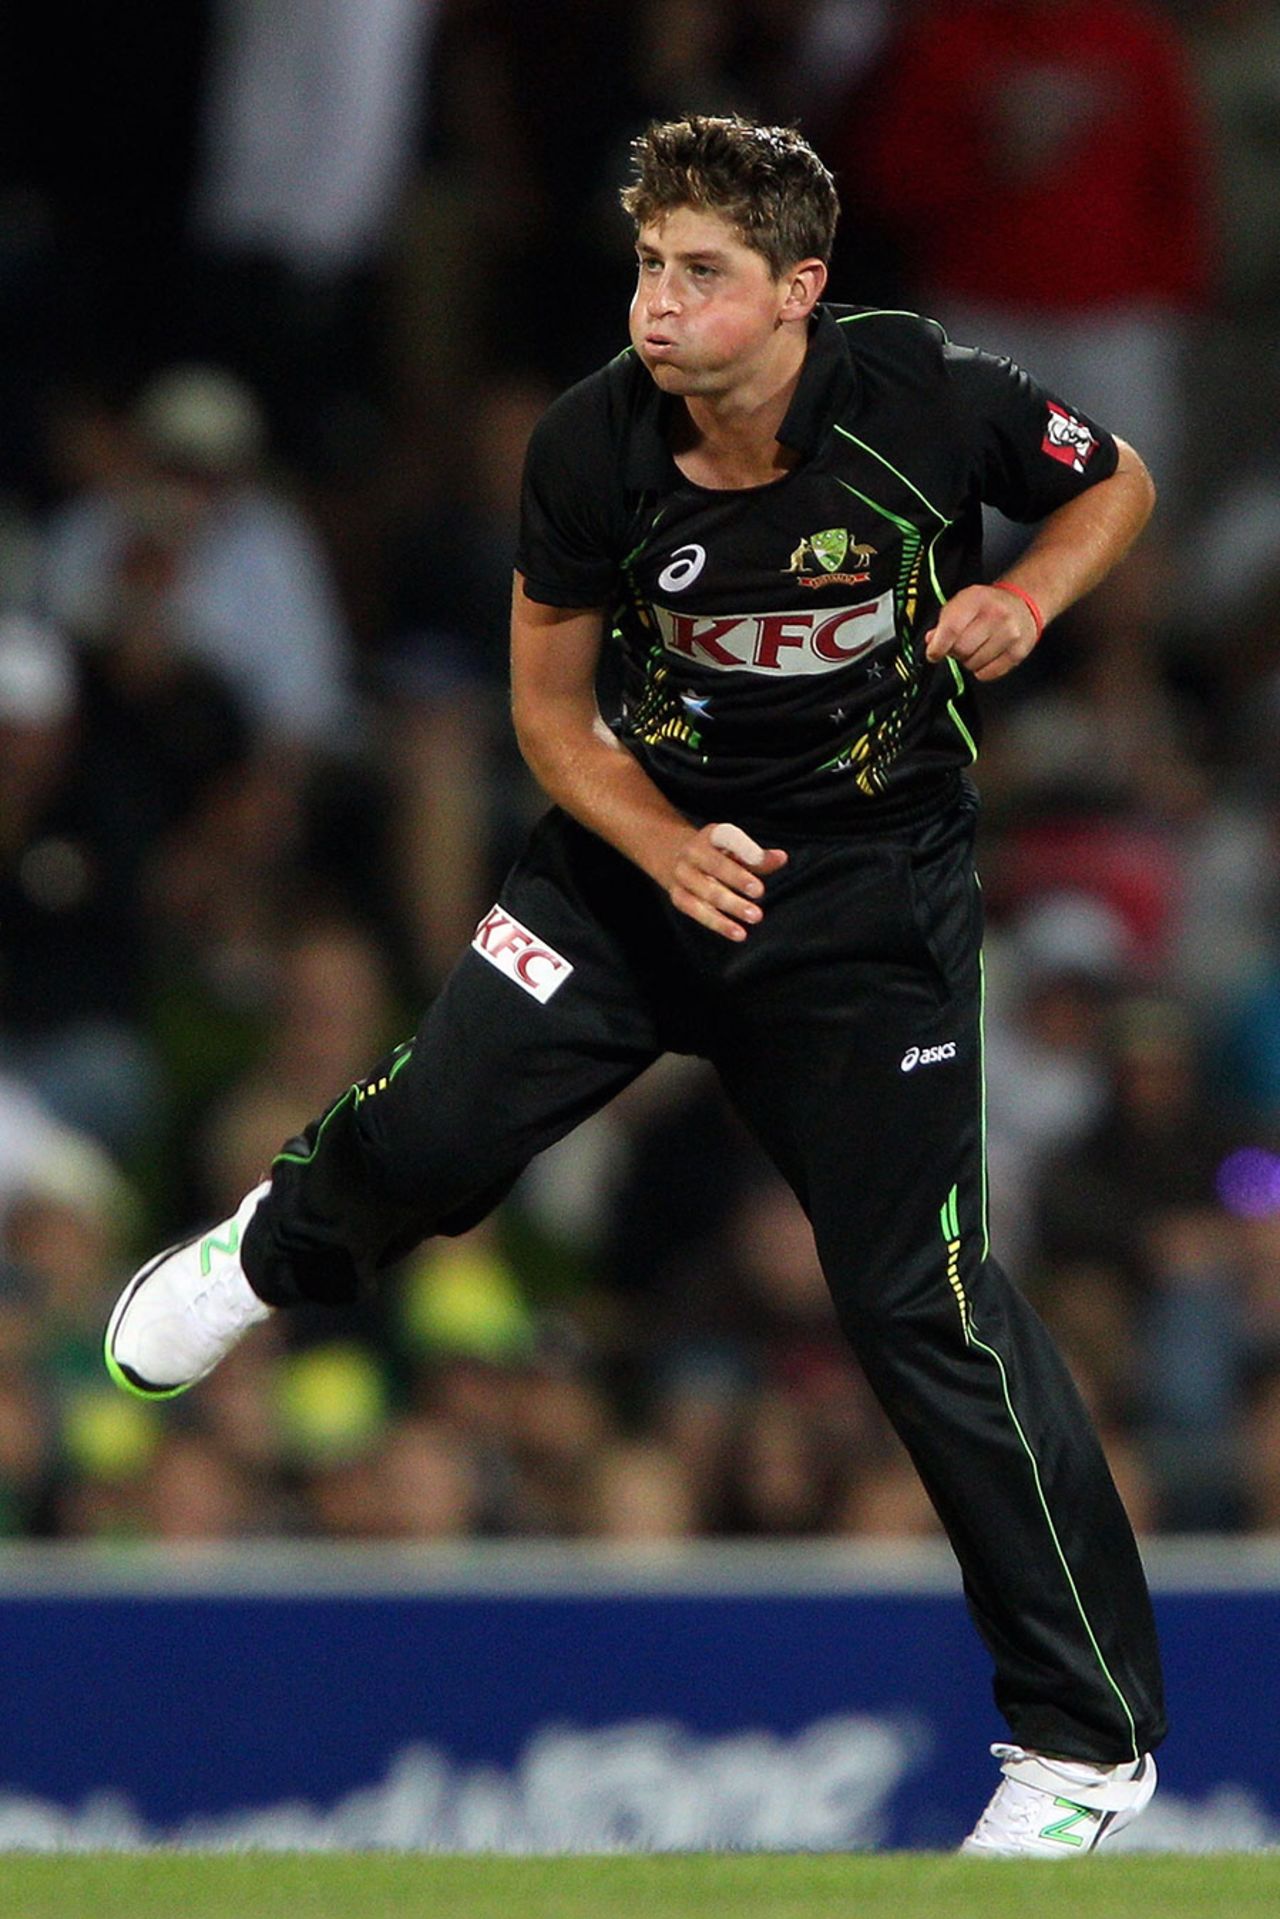 James Muirhead in his follow-through, Australia v England, 1st T20, Hobart, January 29, 2014